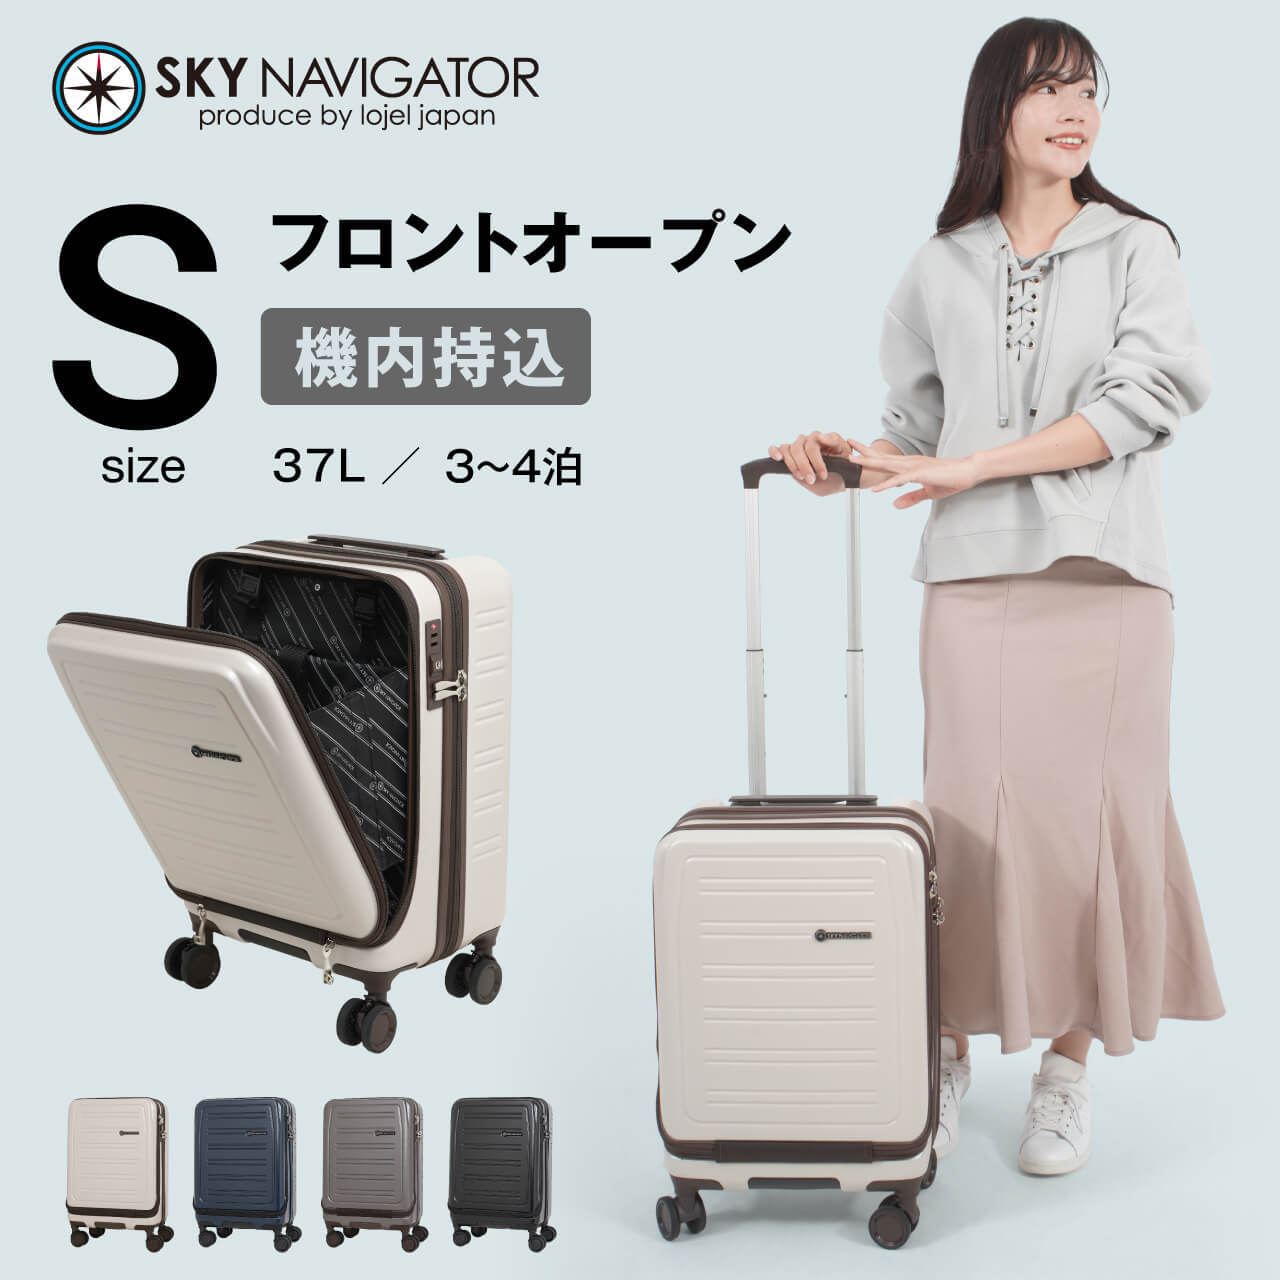 SKYNAVIGATOR スーツケース Sサイズ 機内持ち込み フロントオープン